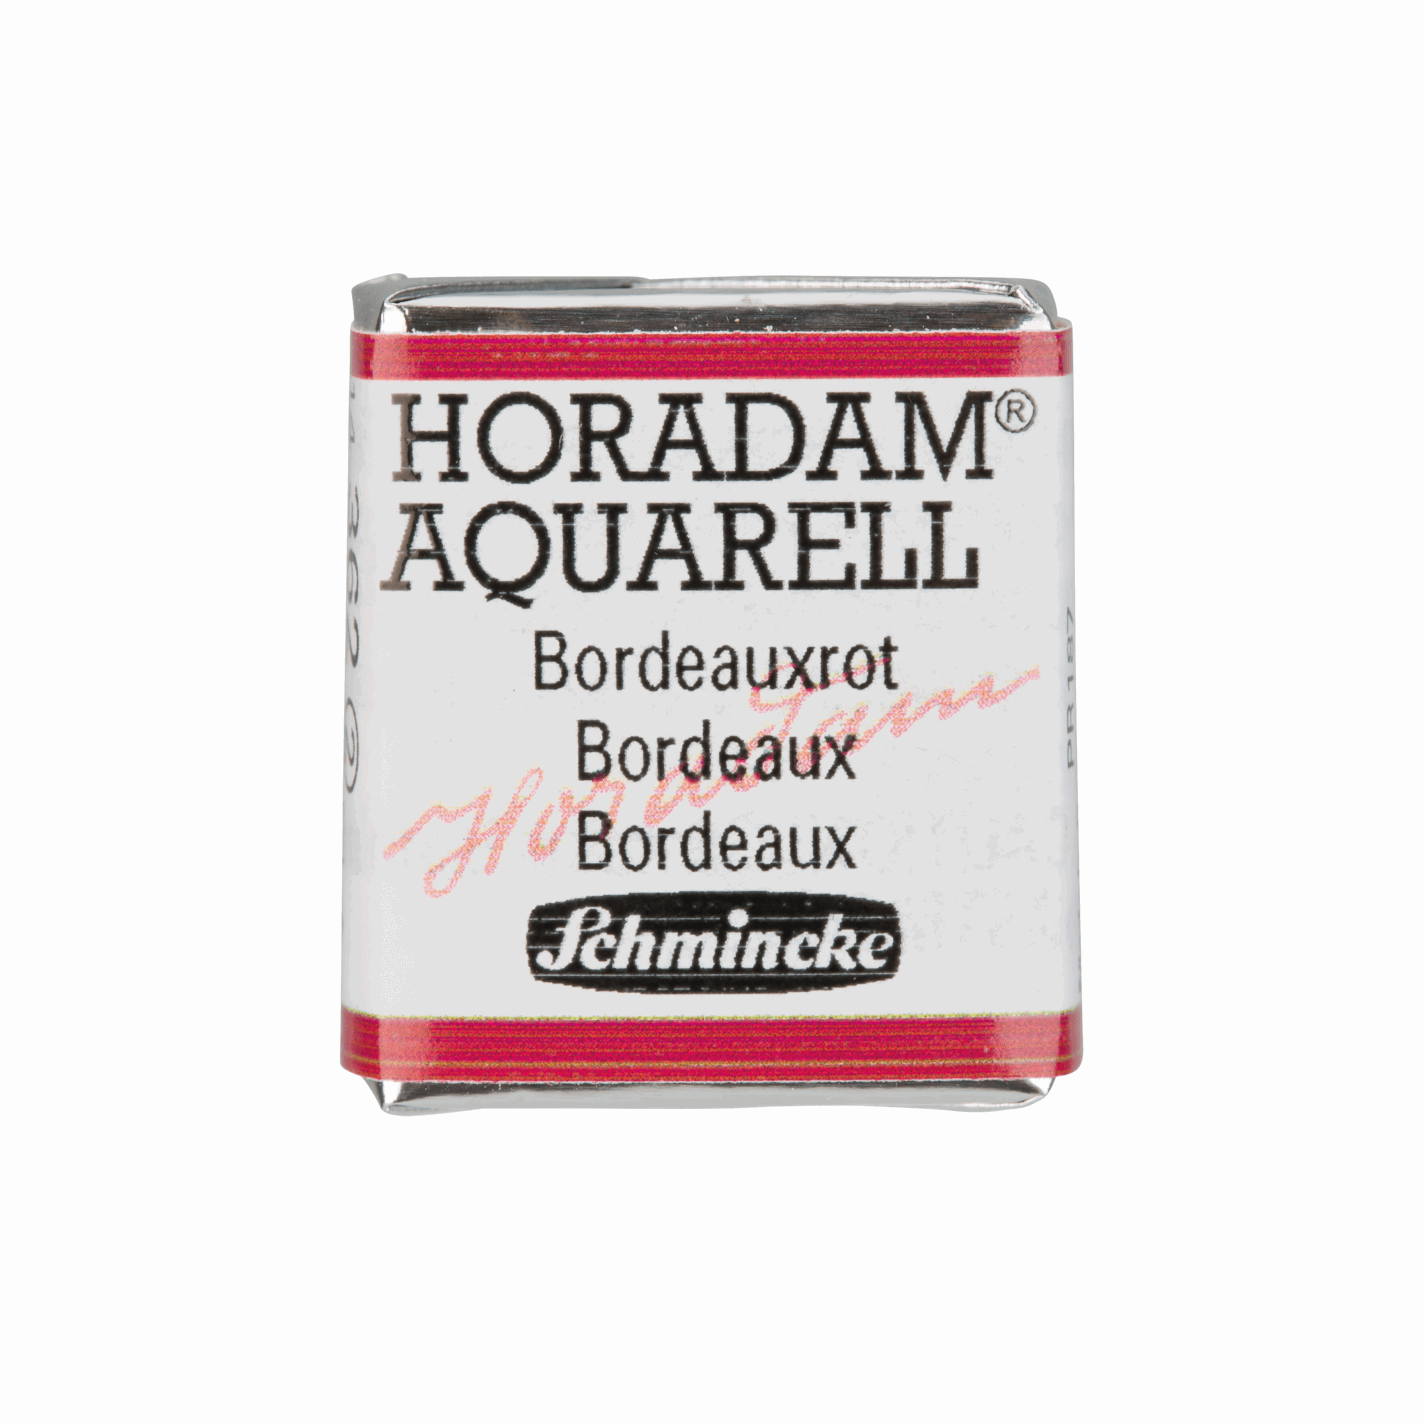 Schmincke Horadam Aquarell pans Bordeaux